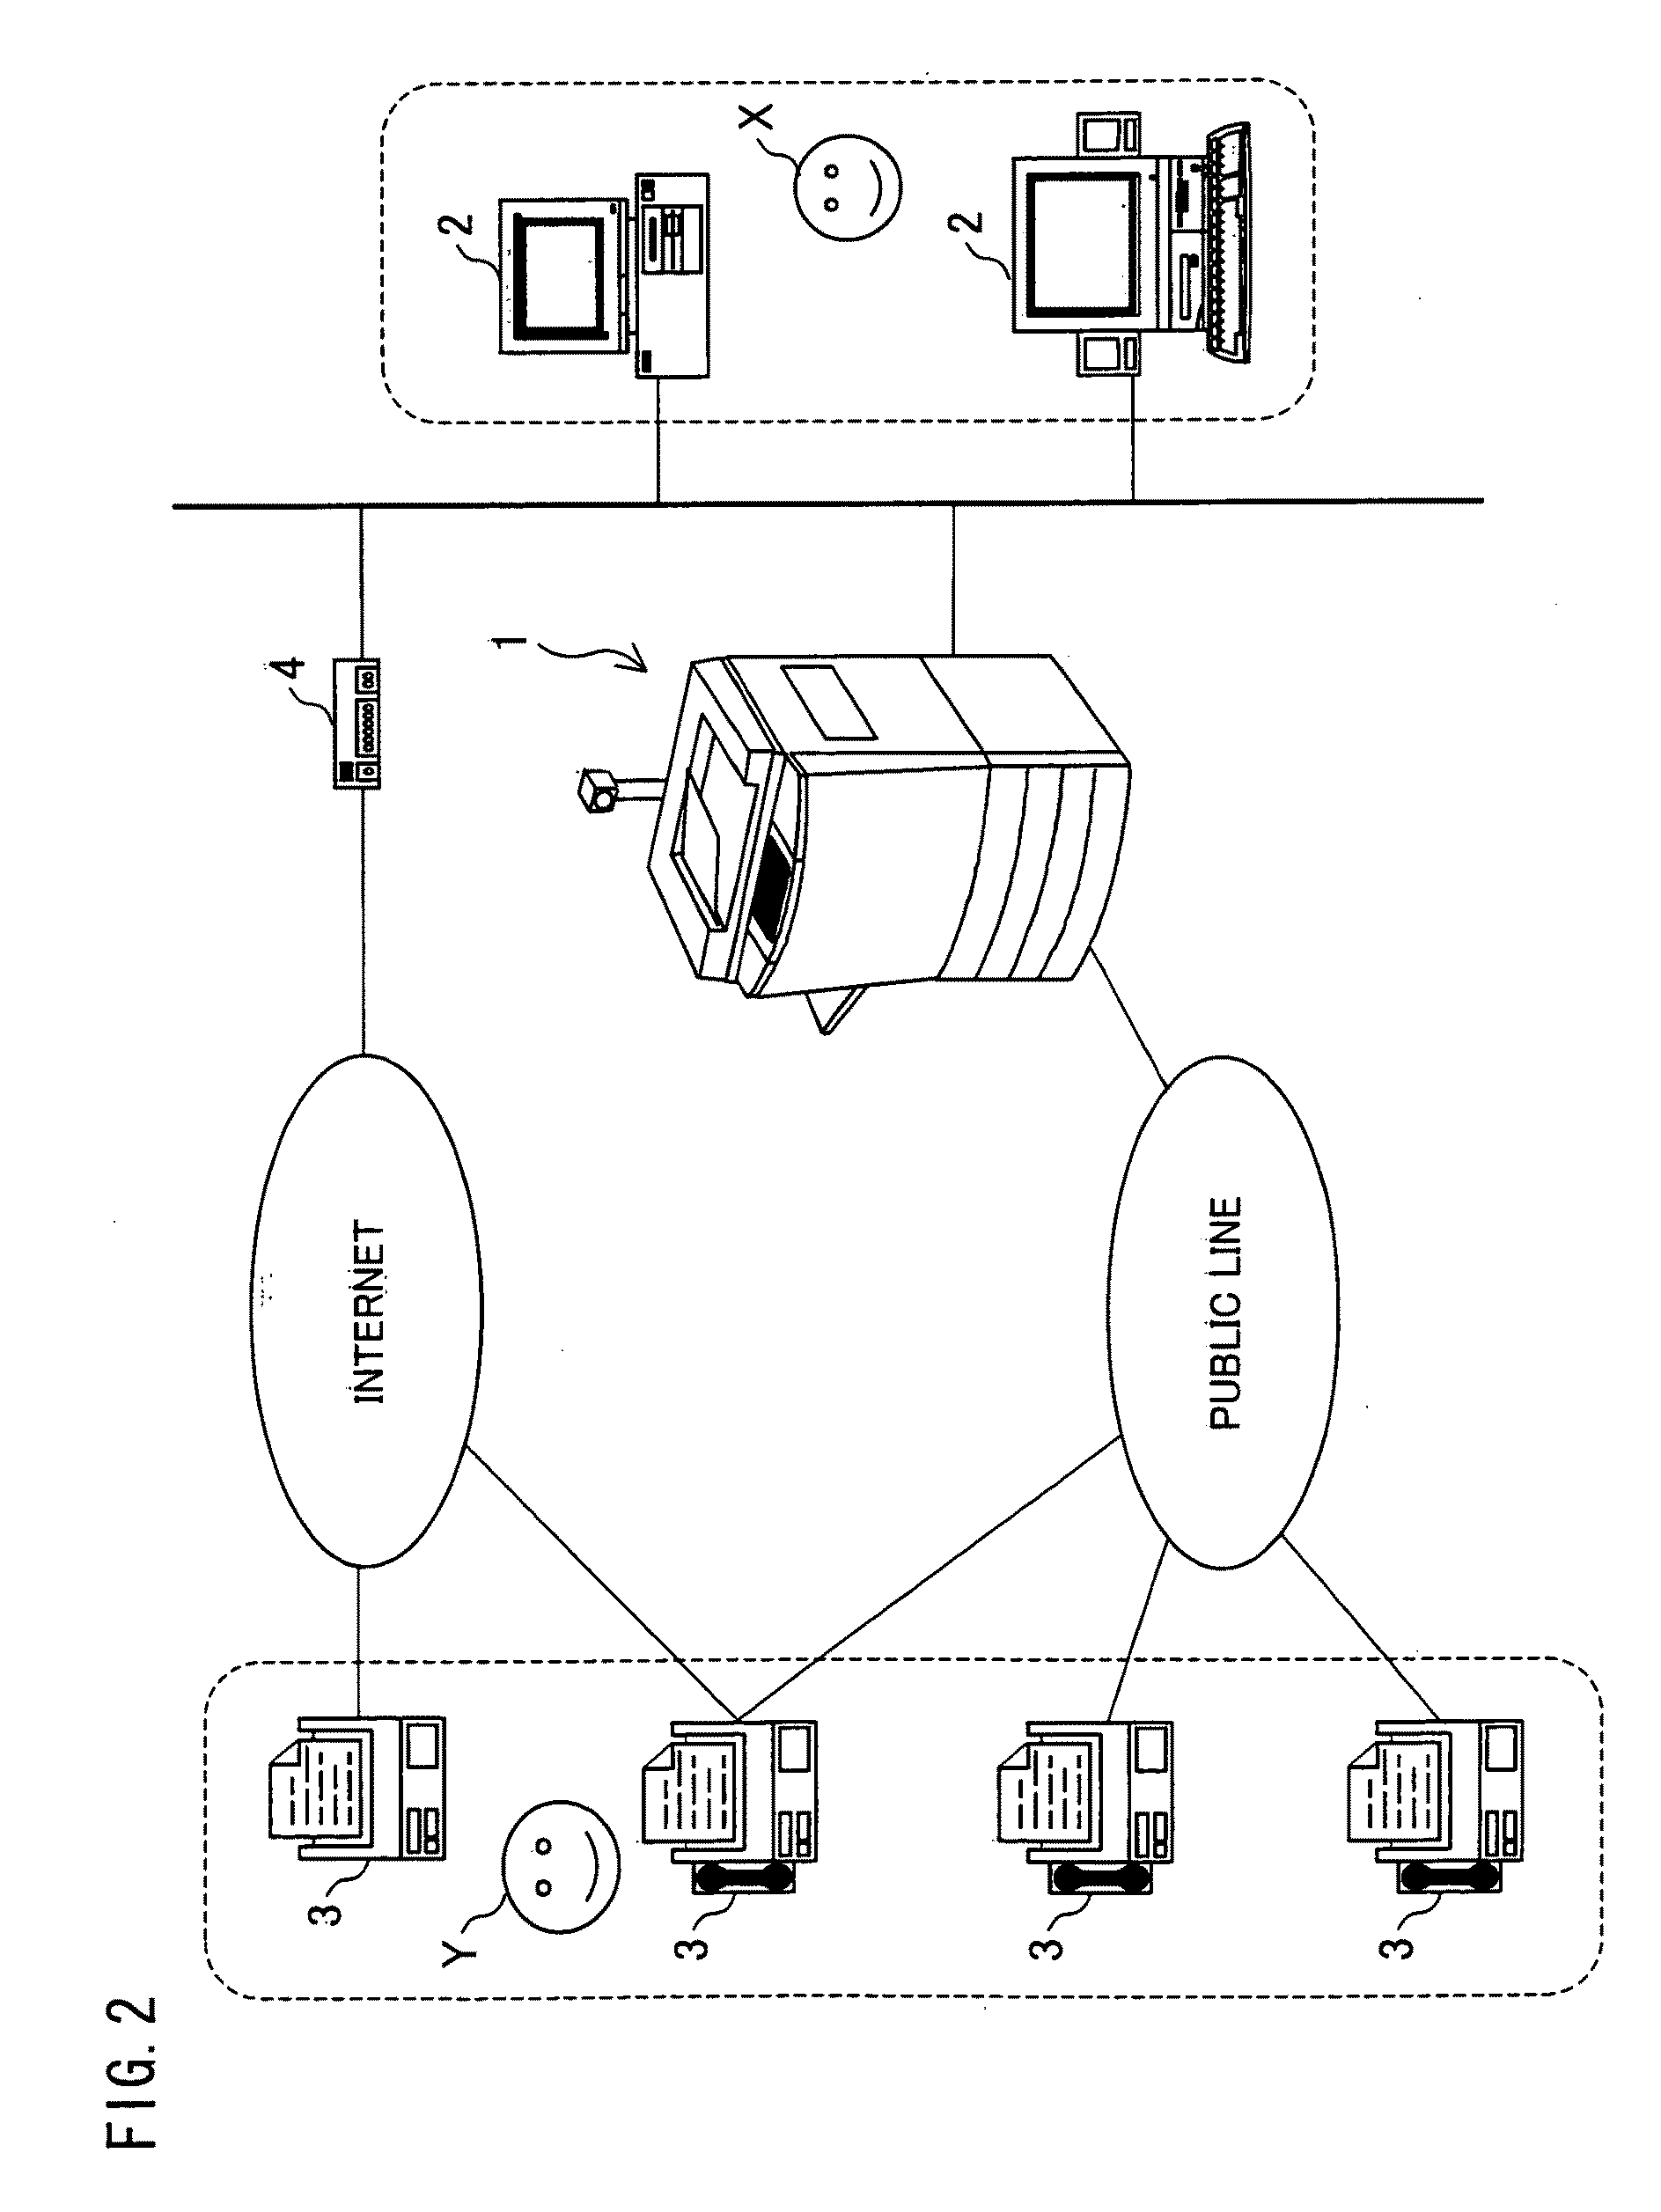 Control device, image forming apparatus, method of controlling image forming apparatus, and recording medium